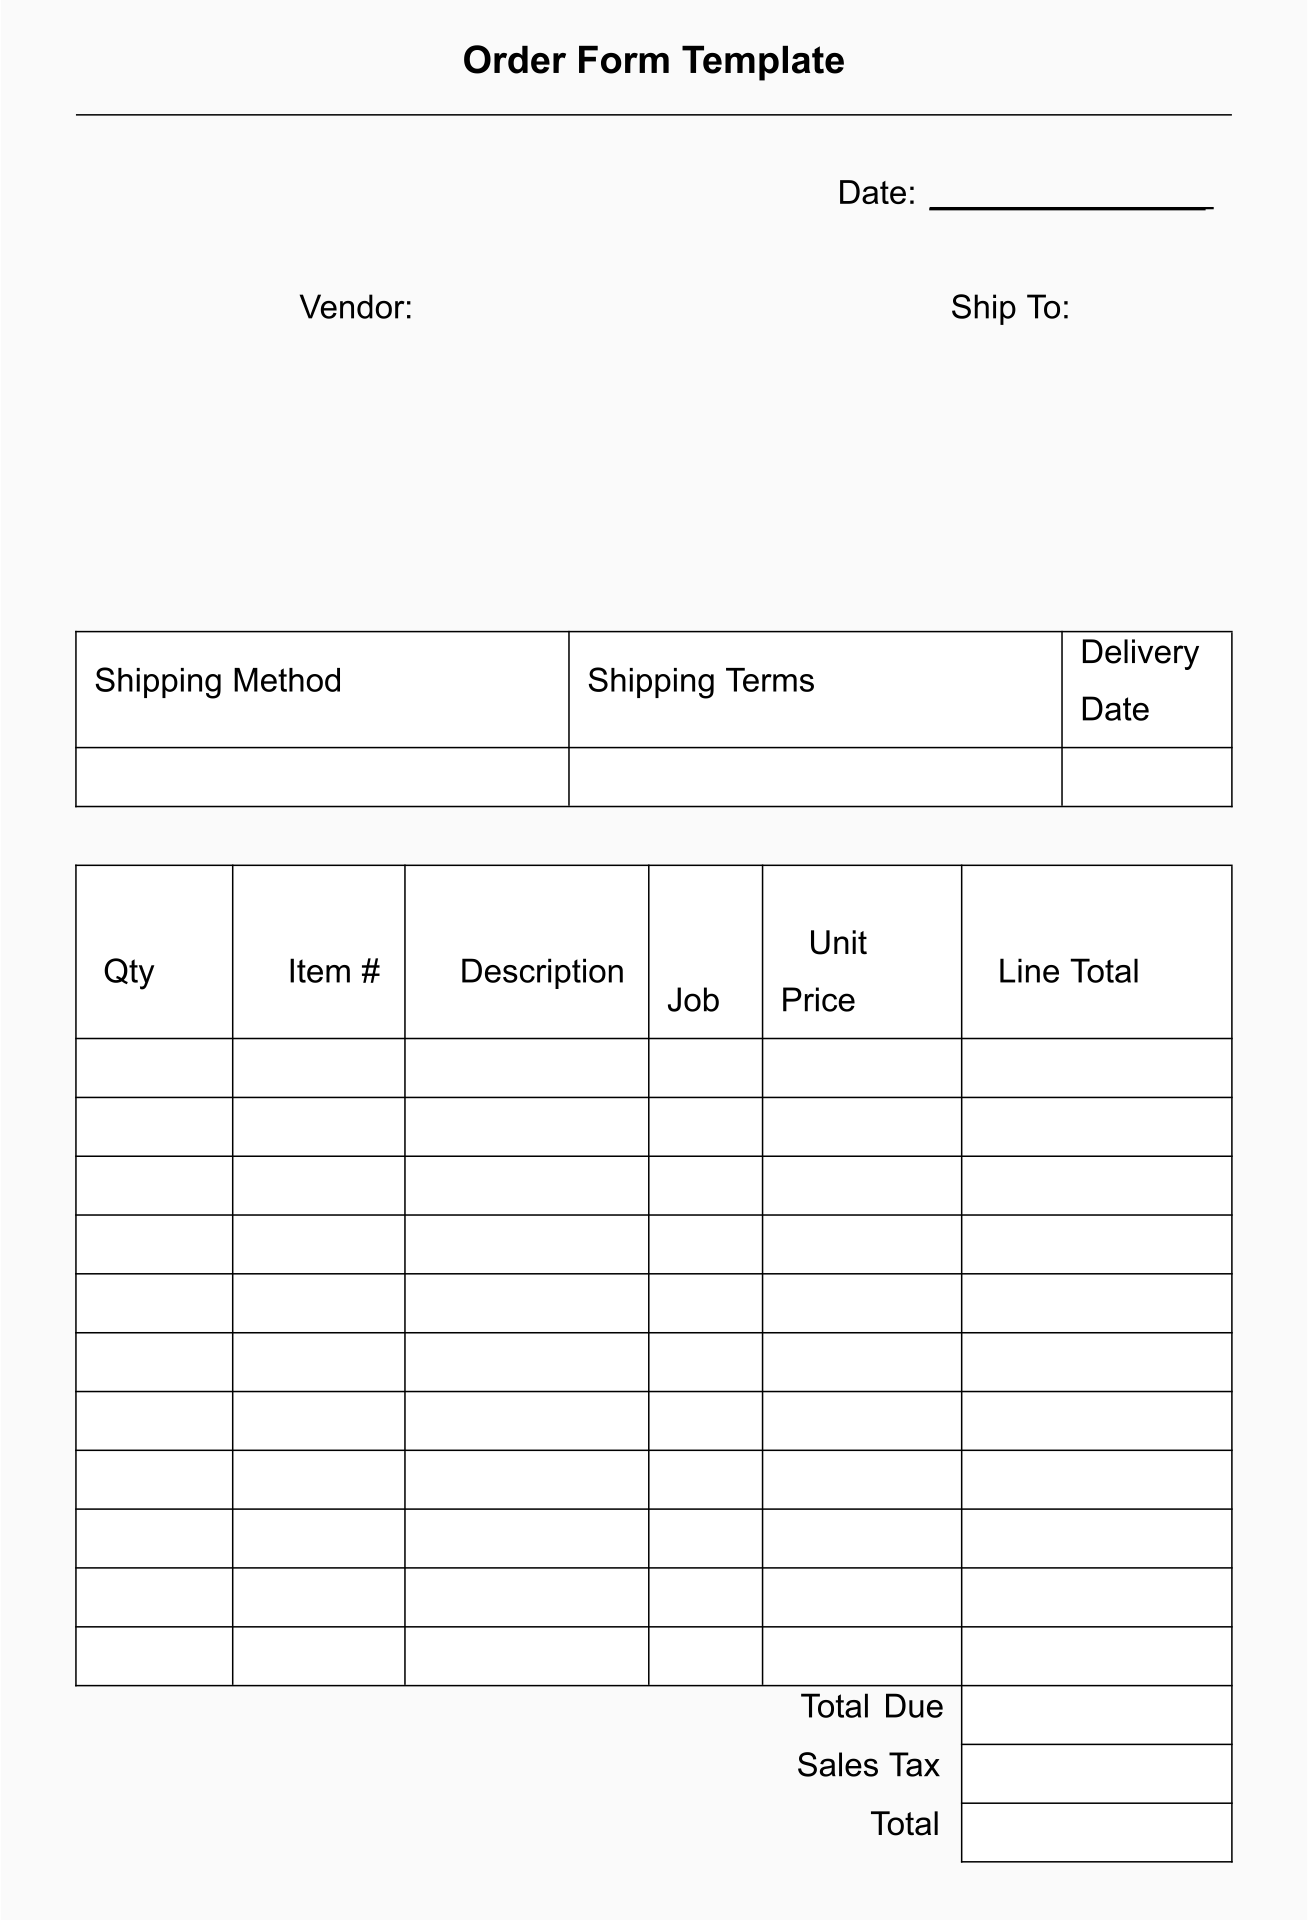 9 Best Images of Free Printable Blank Order Forms - Free Printable